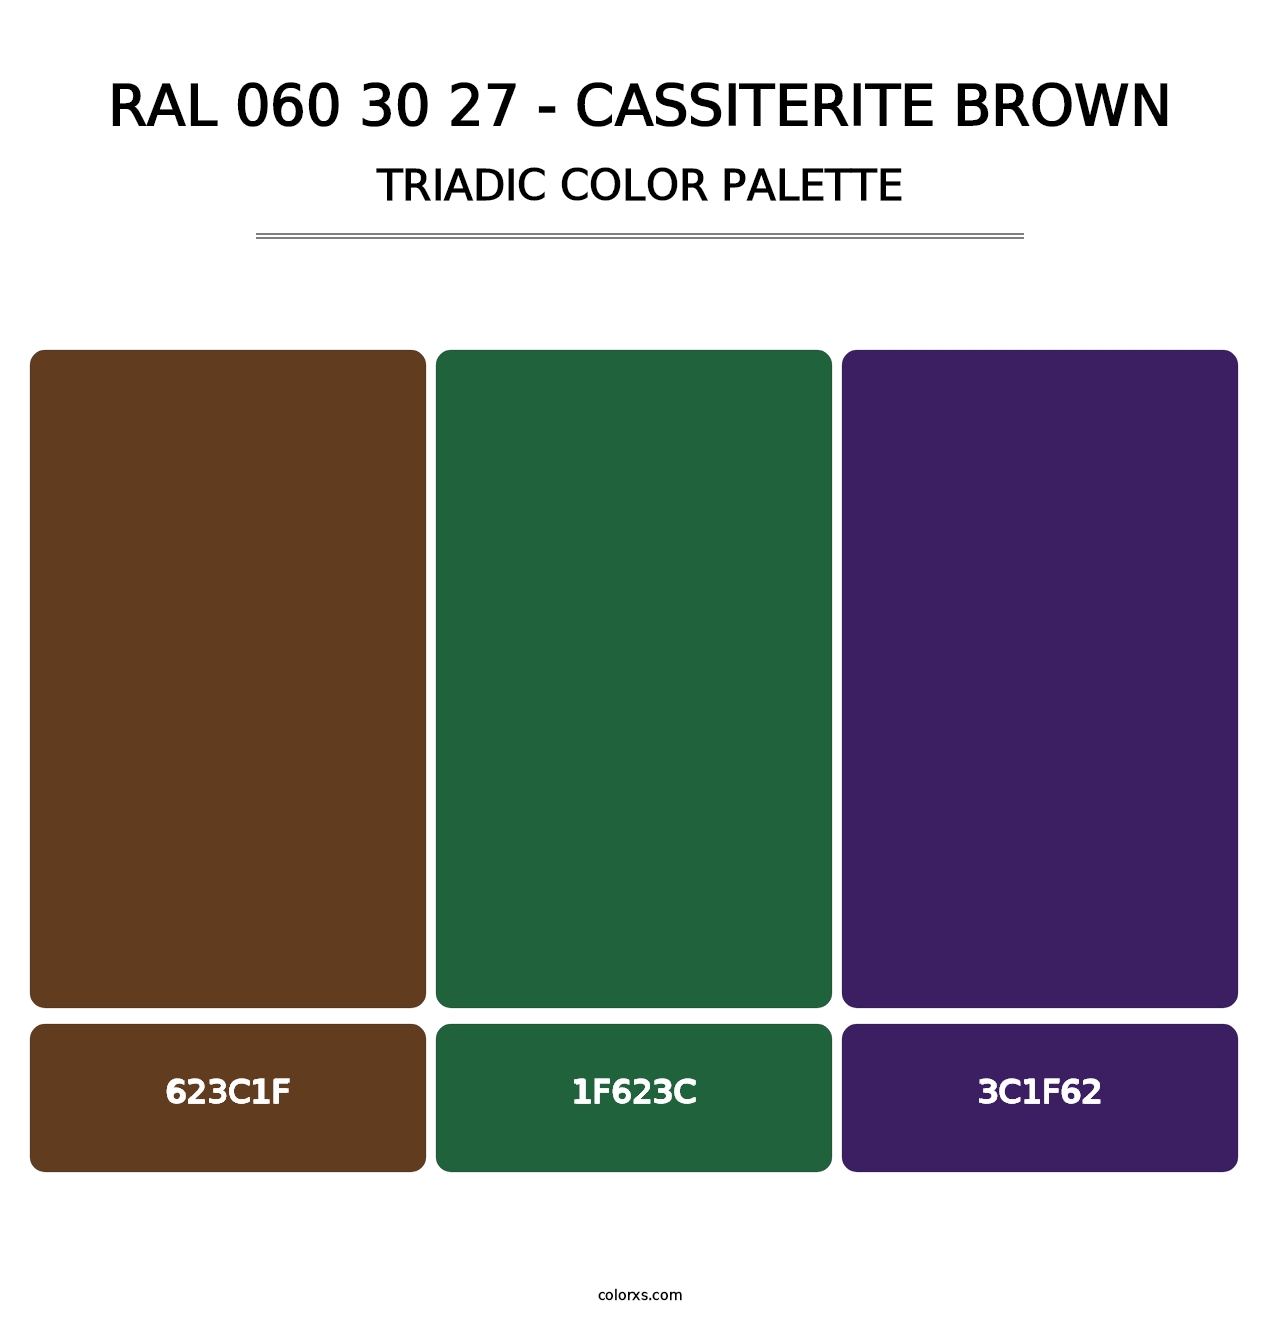 RAL 060 30 27 - Cassiterite Brown - Triadic Color Palette